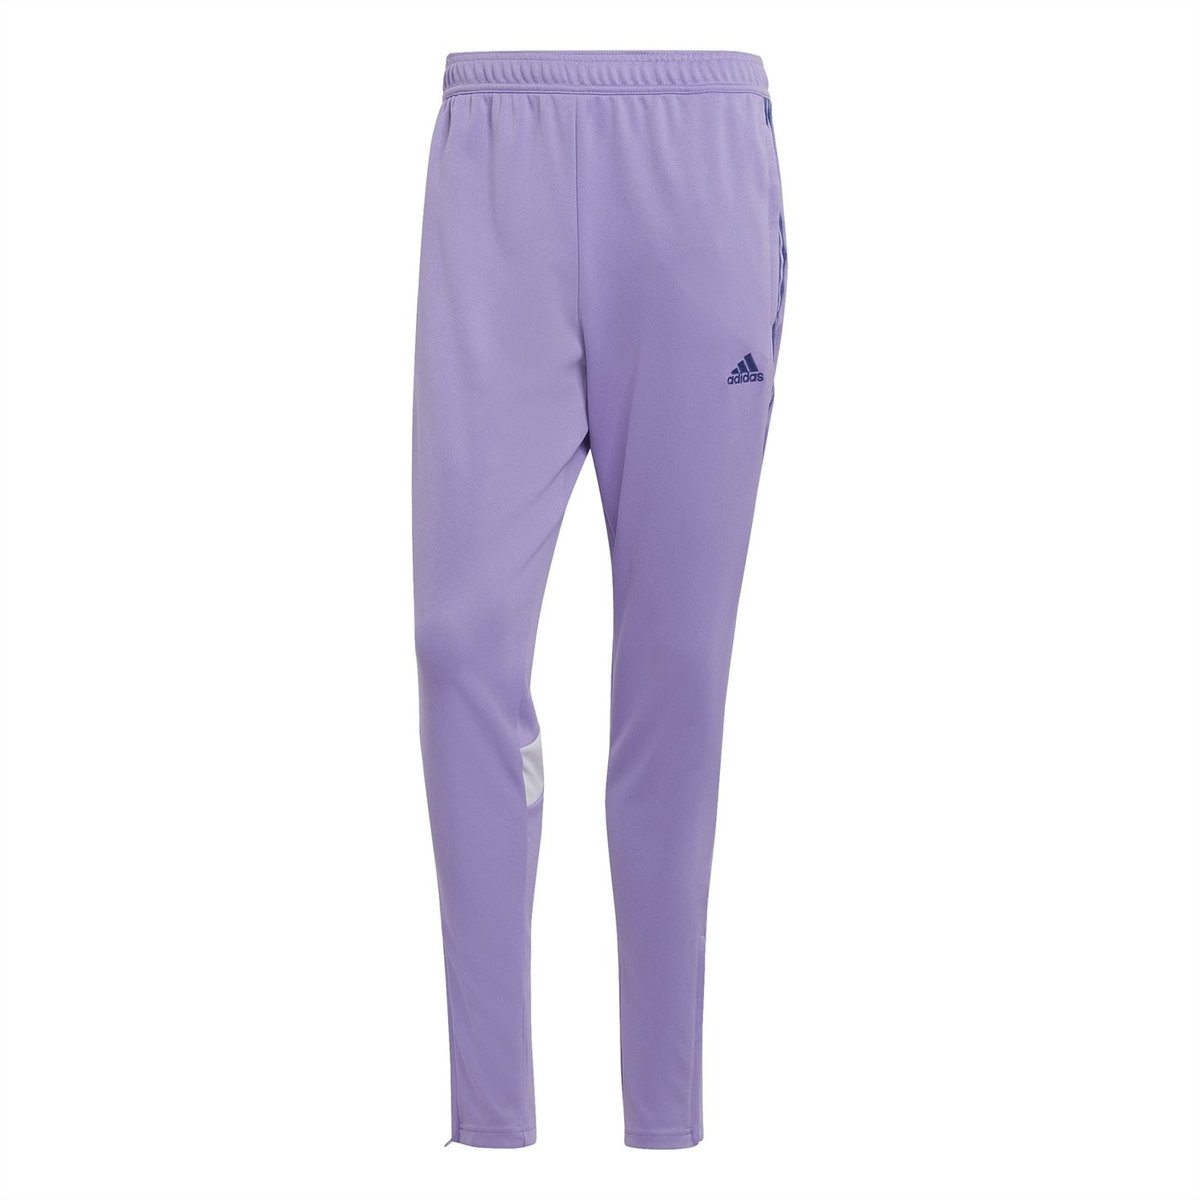 ADIDAS Womens Climalite Leggings UK 16-18 Large Purple Polyester